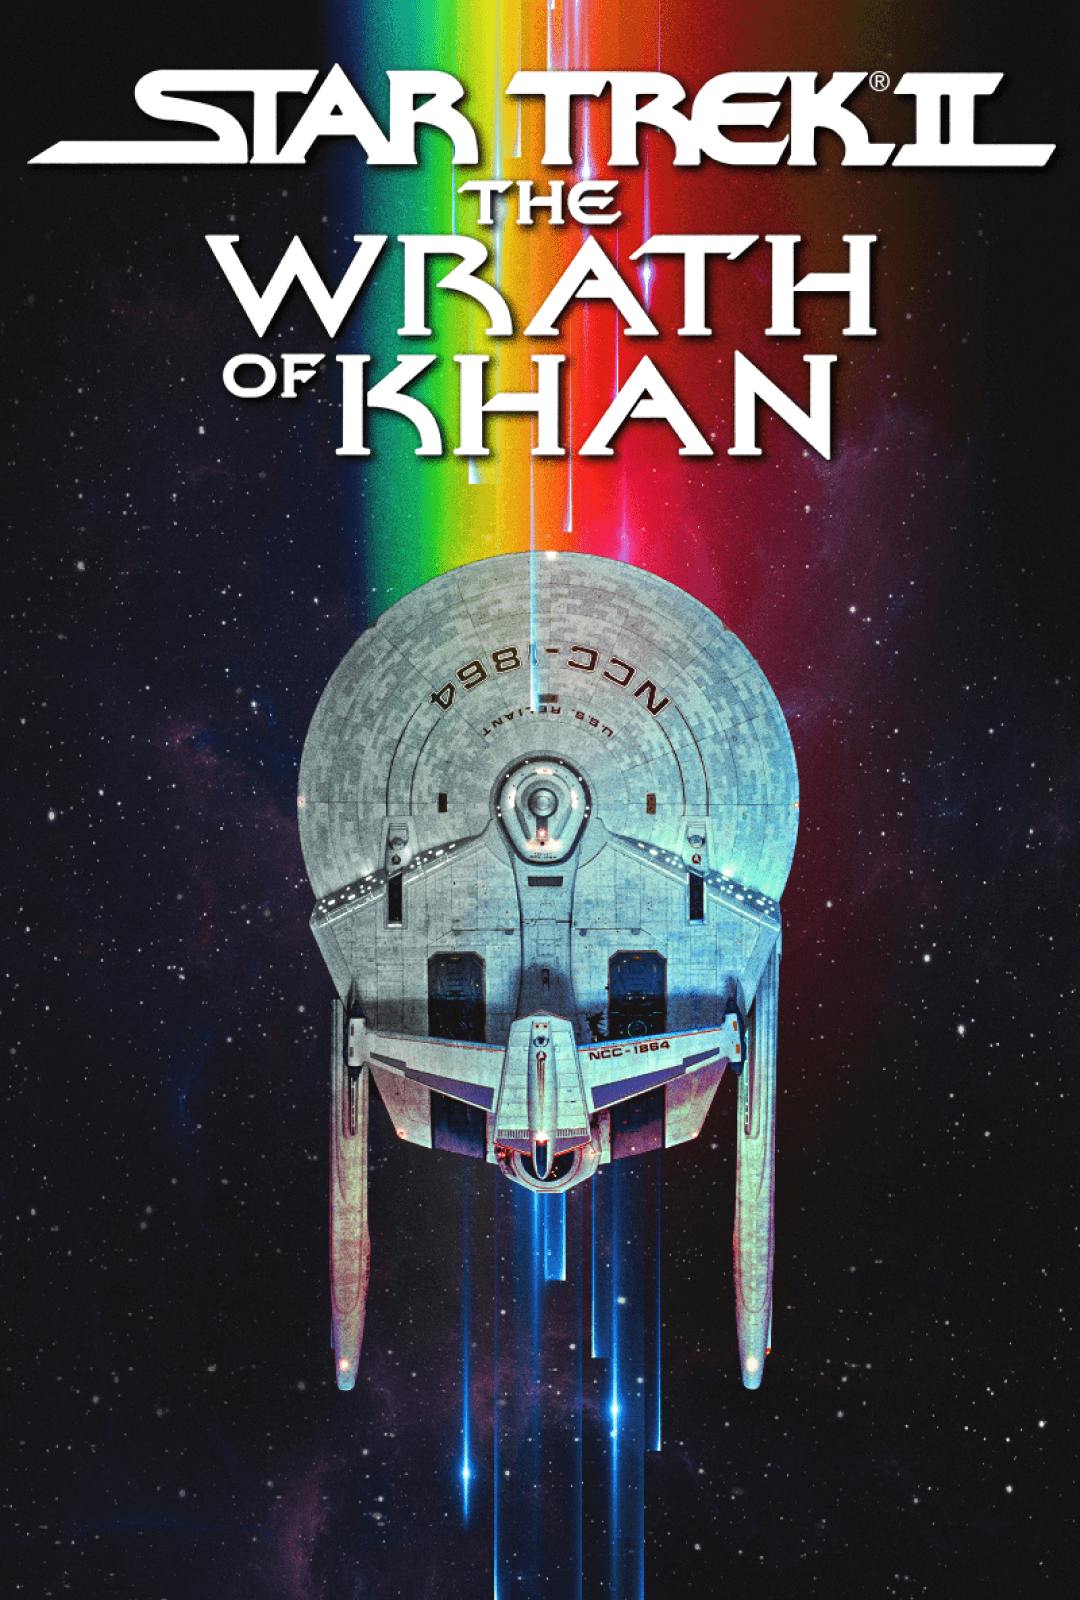 Poster art for Star Trek II: The Wrath of Khan featuring the U.S.S. Enterprise